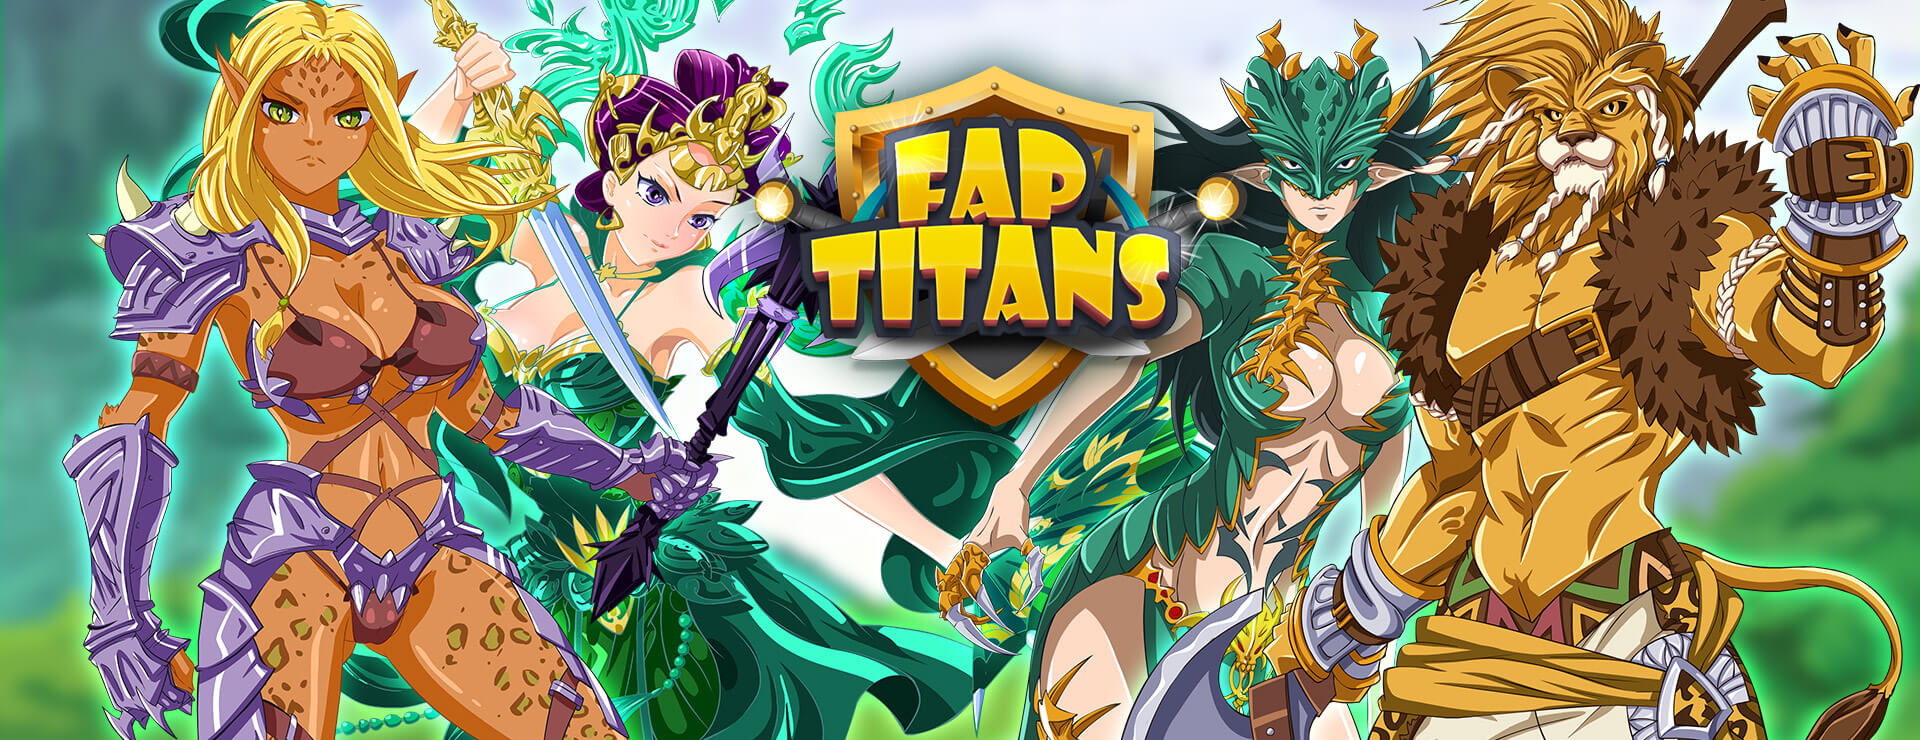 Fap Titans Game - Casual Juego